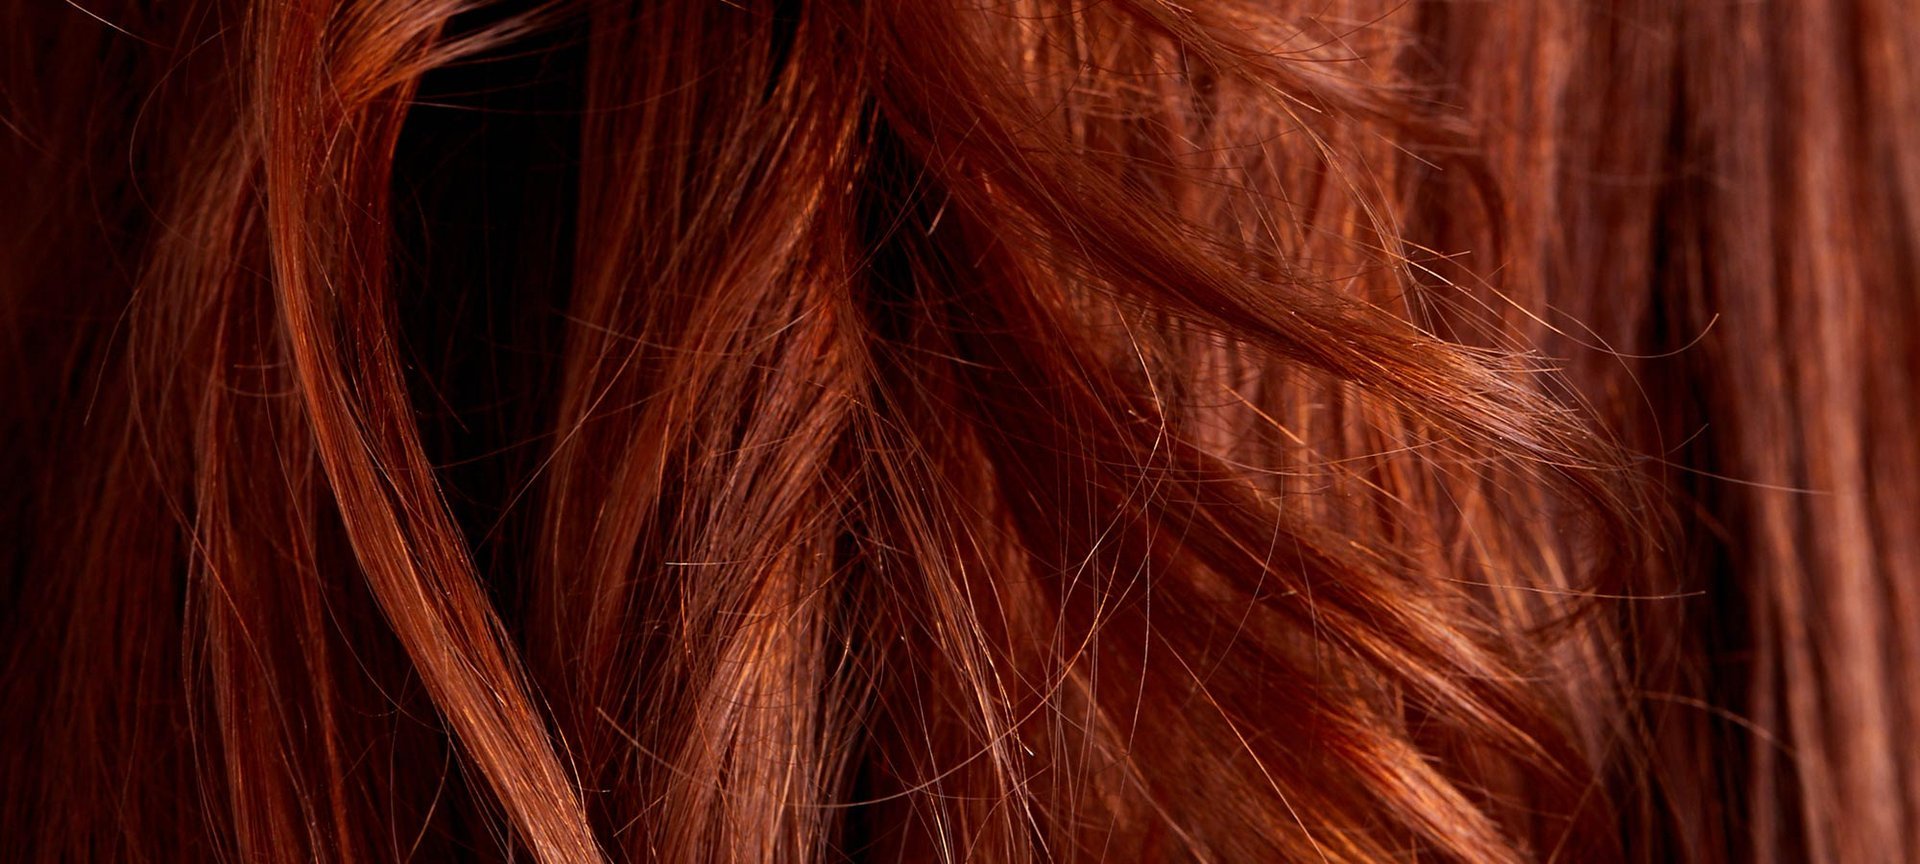 What Is Hair Made Of? - L'Oréal Paris